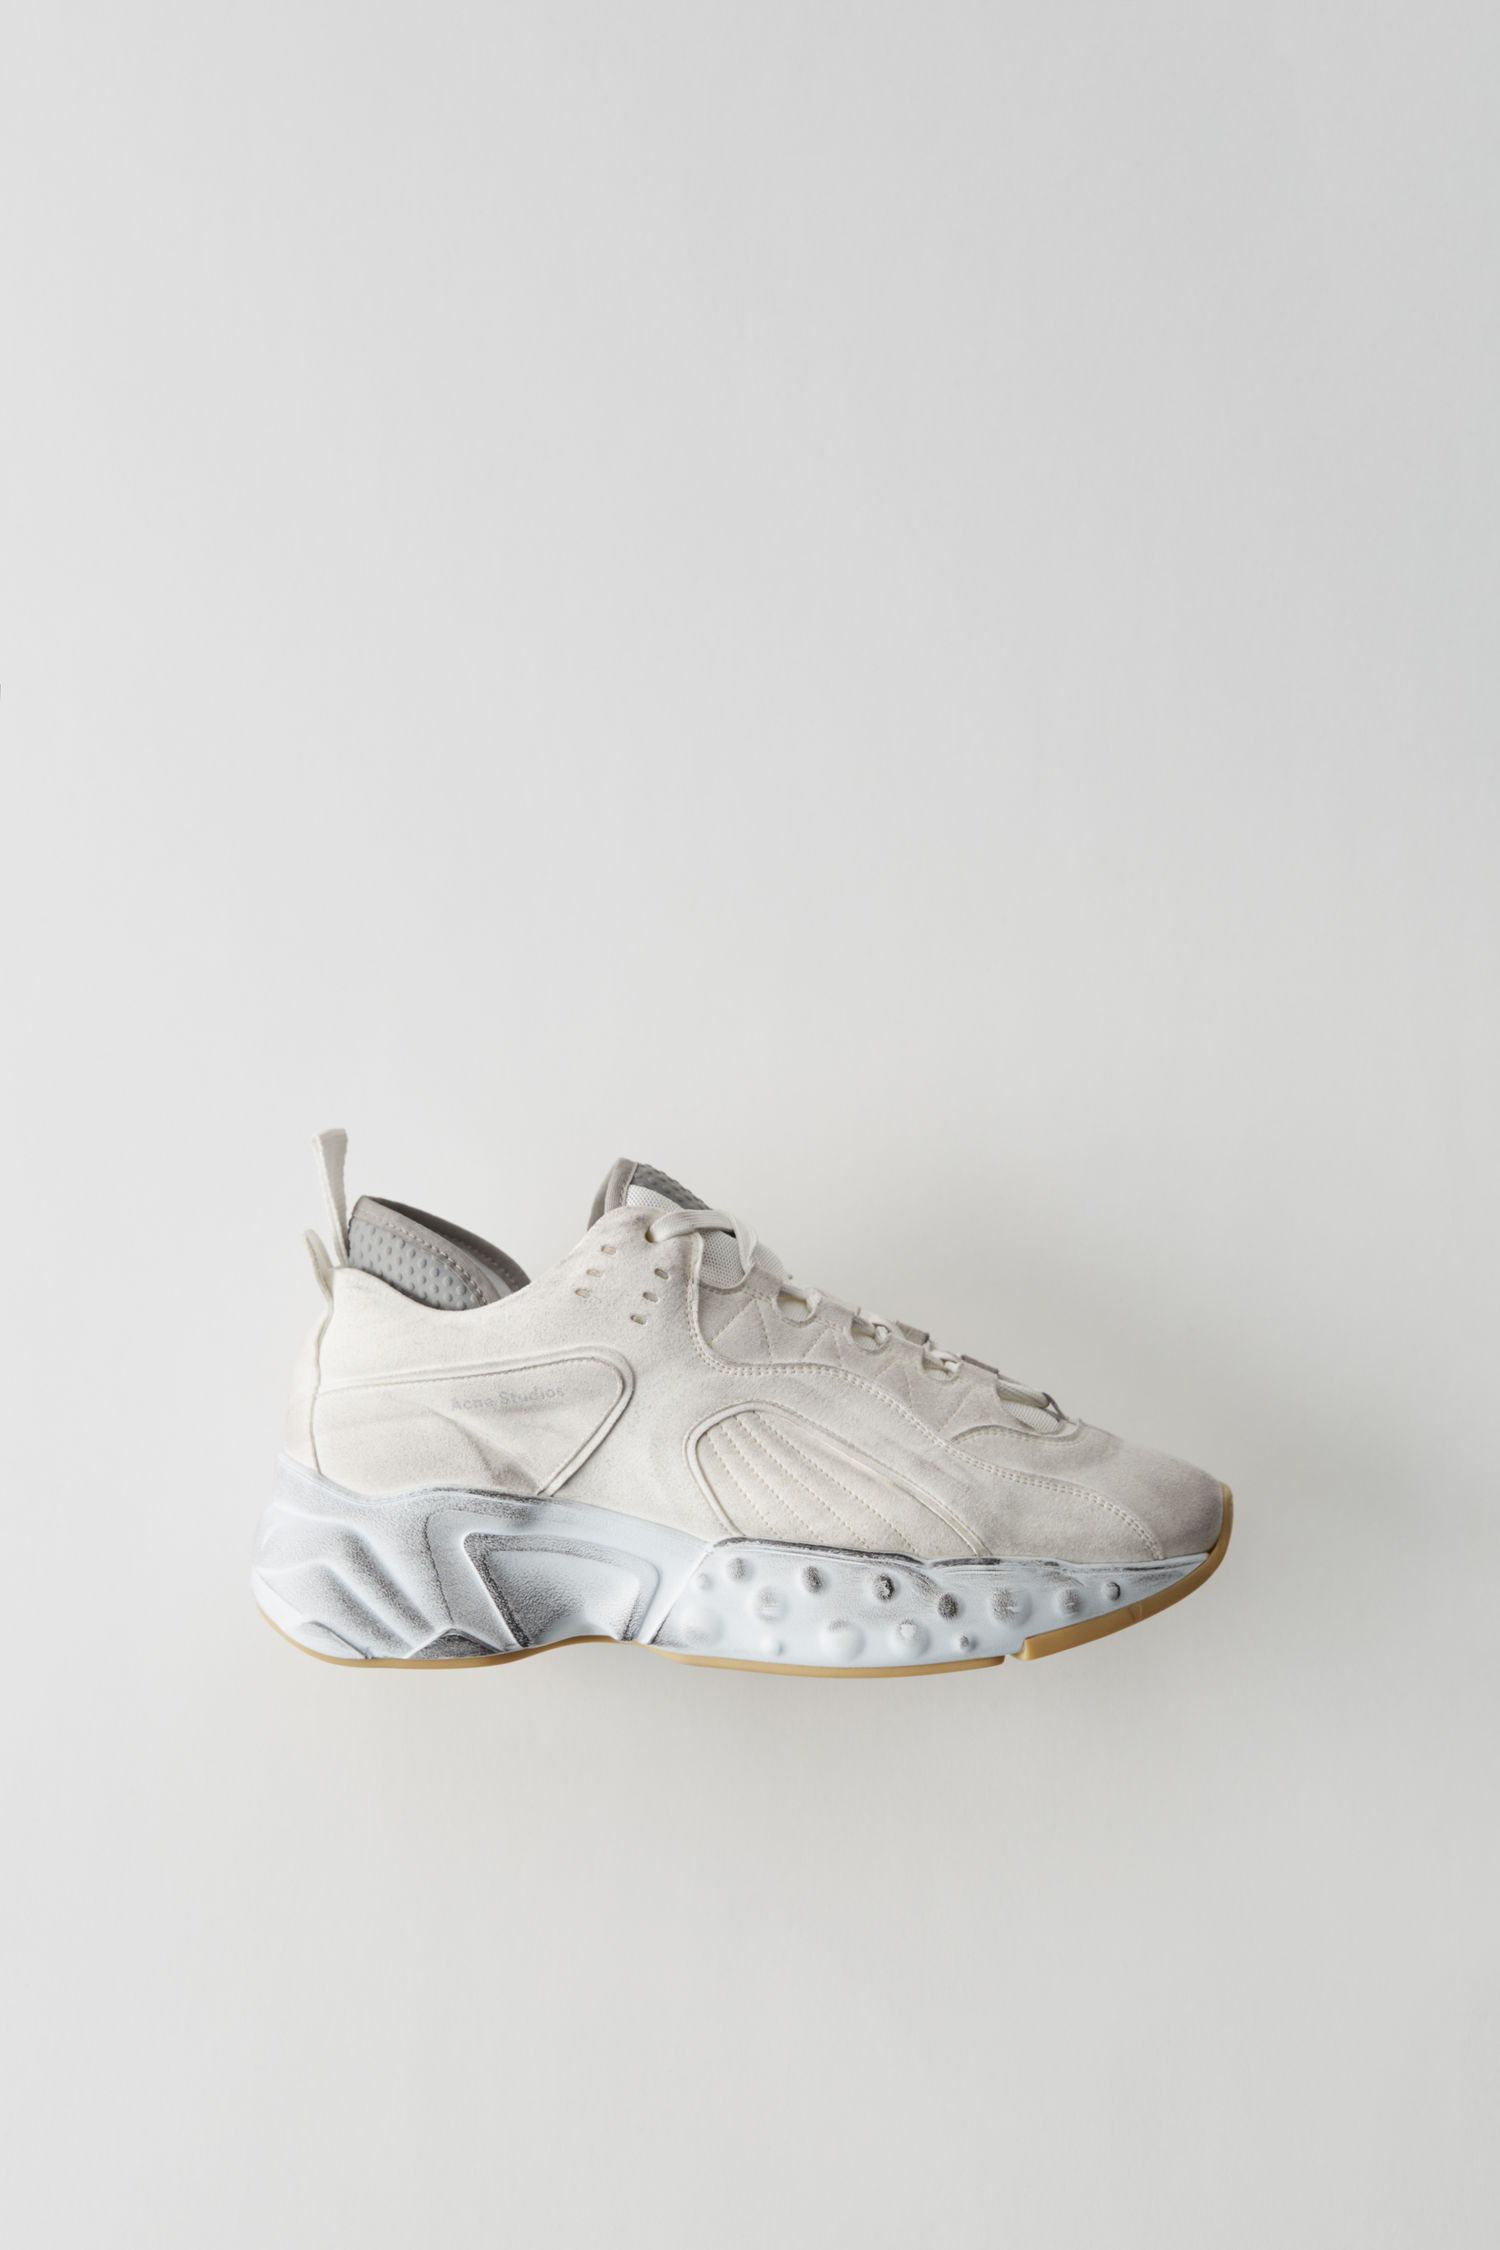 Acne A Tone-On-Tone White Manhattan Sneaker